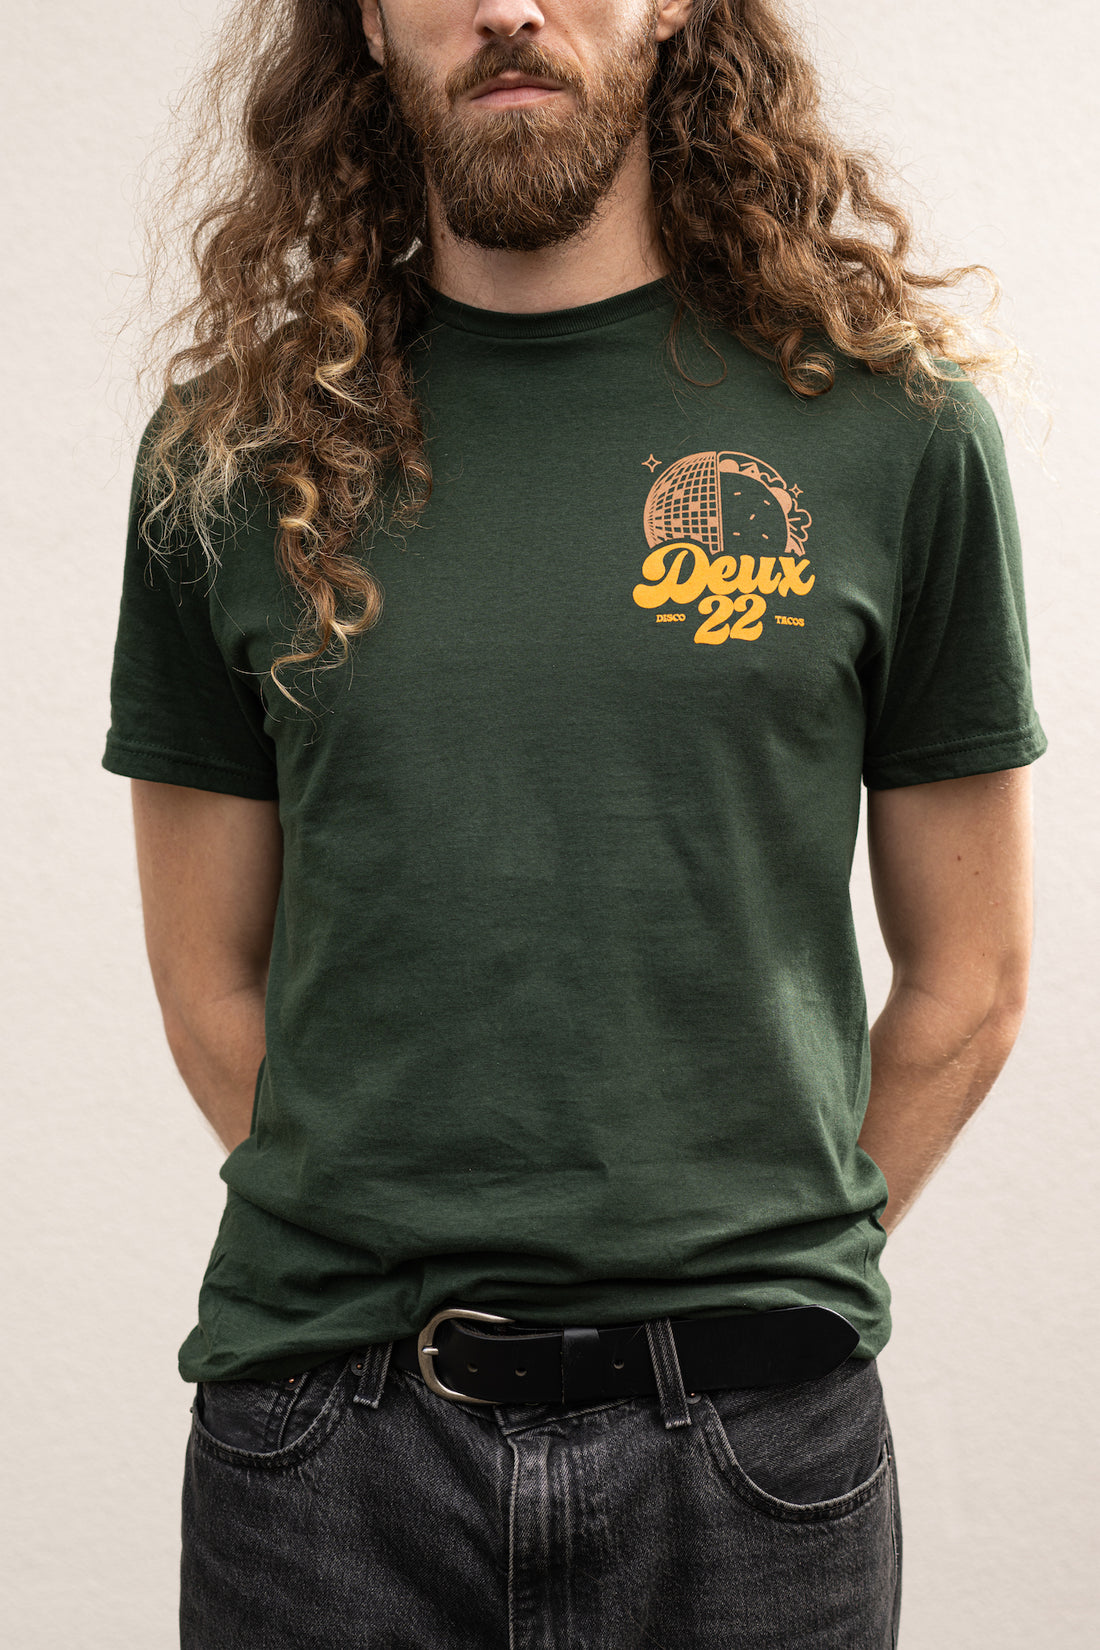 T-Shirt Tacos Vert Forêt Deux22